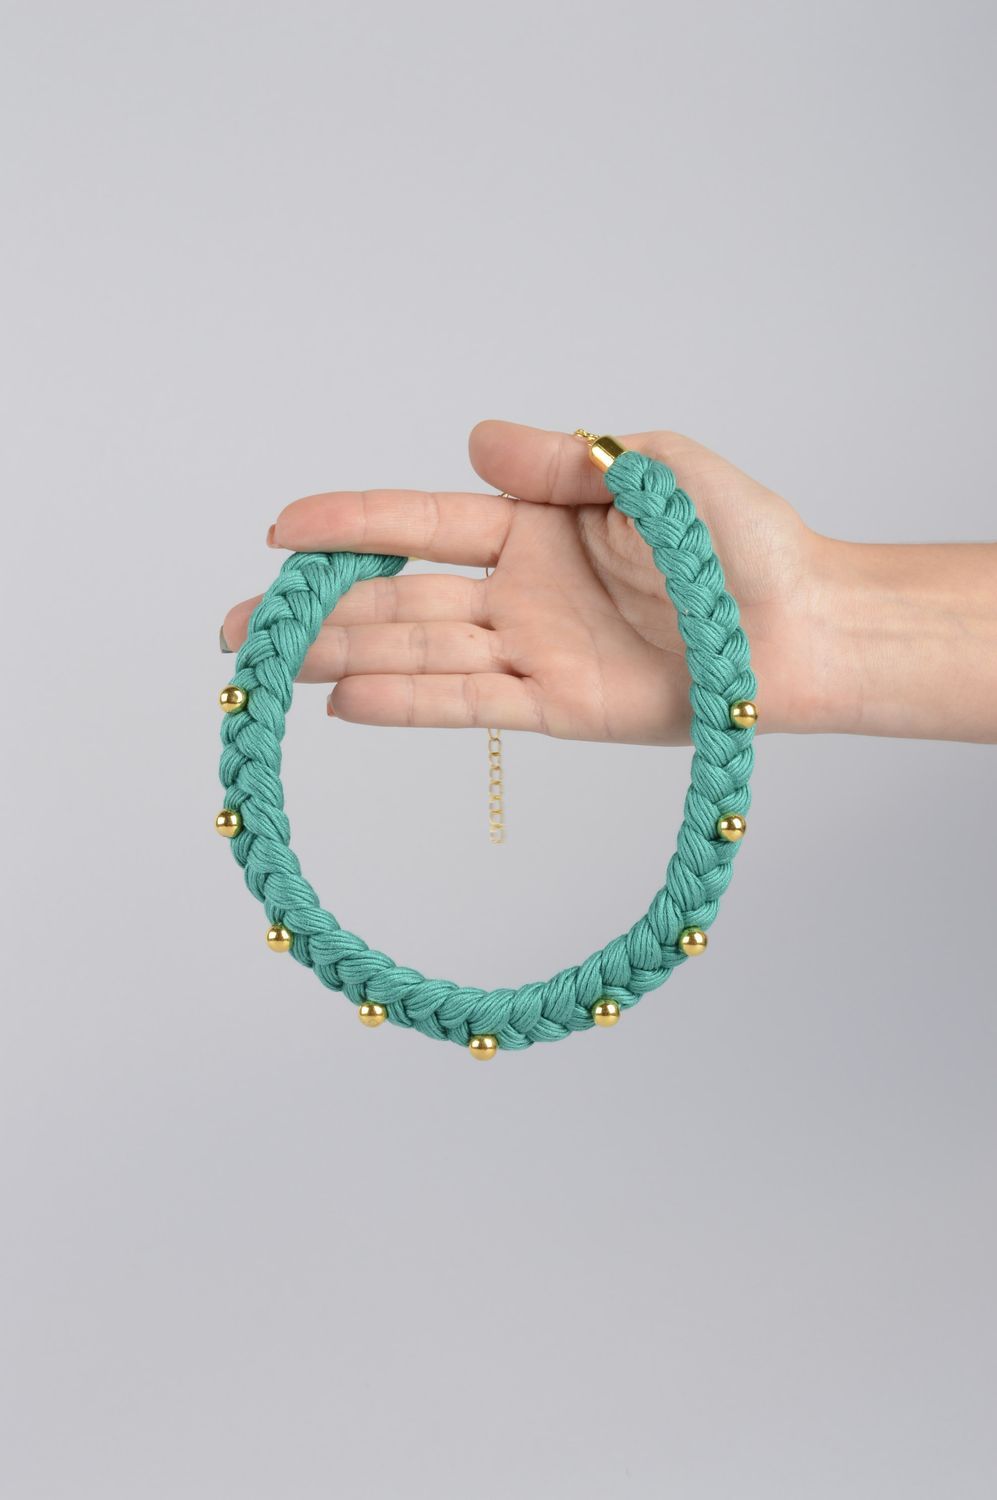 Handmade tender accessory designer stylish jewelry beautiful mint necklace photo 4